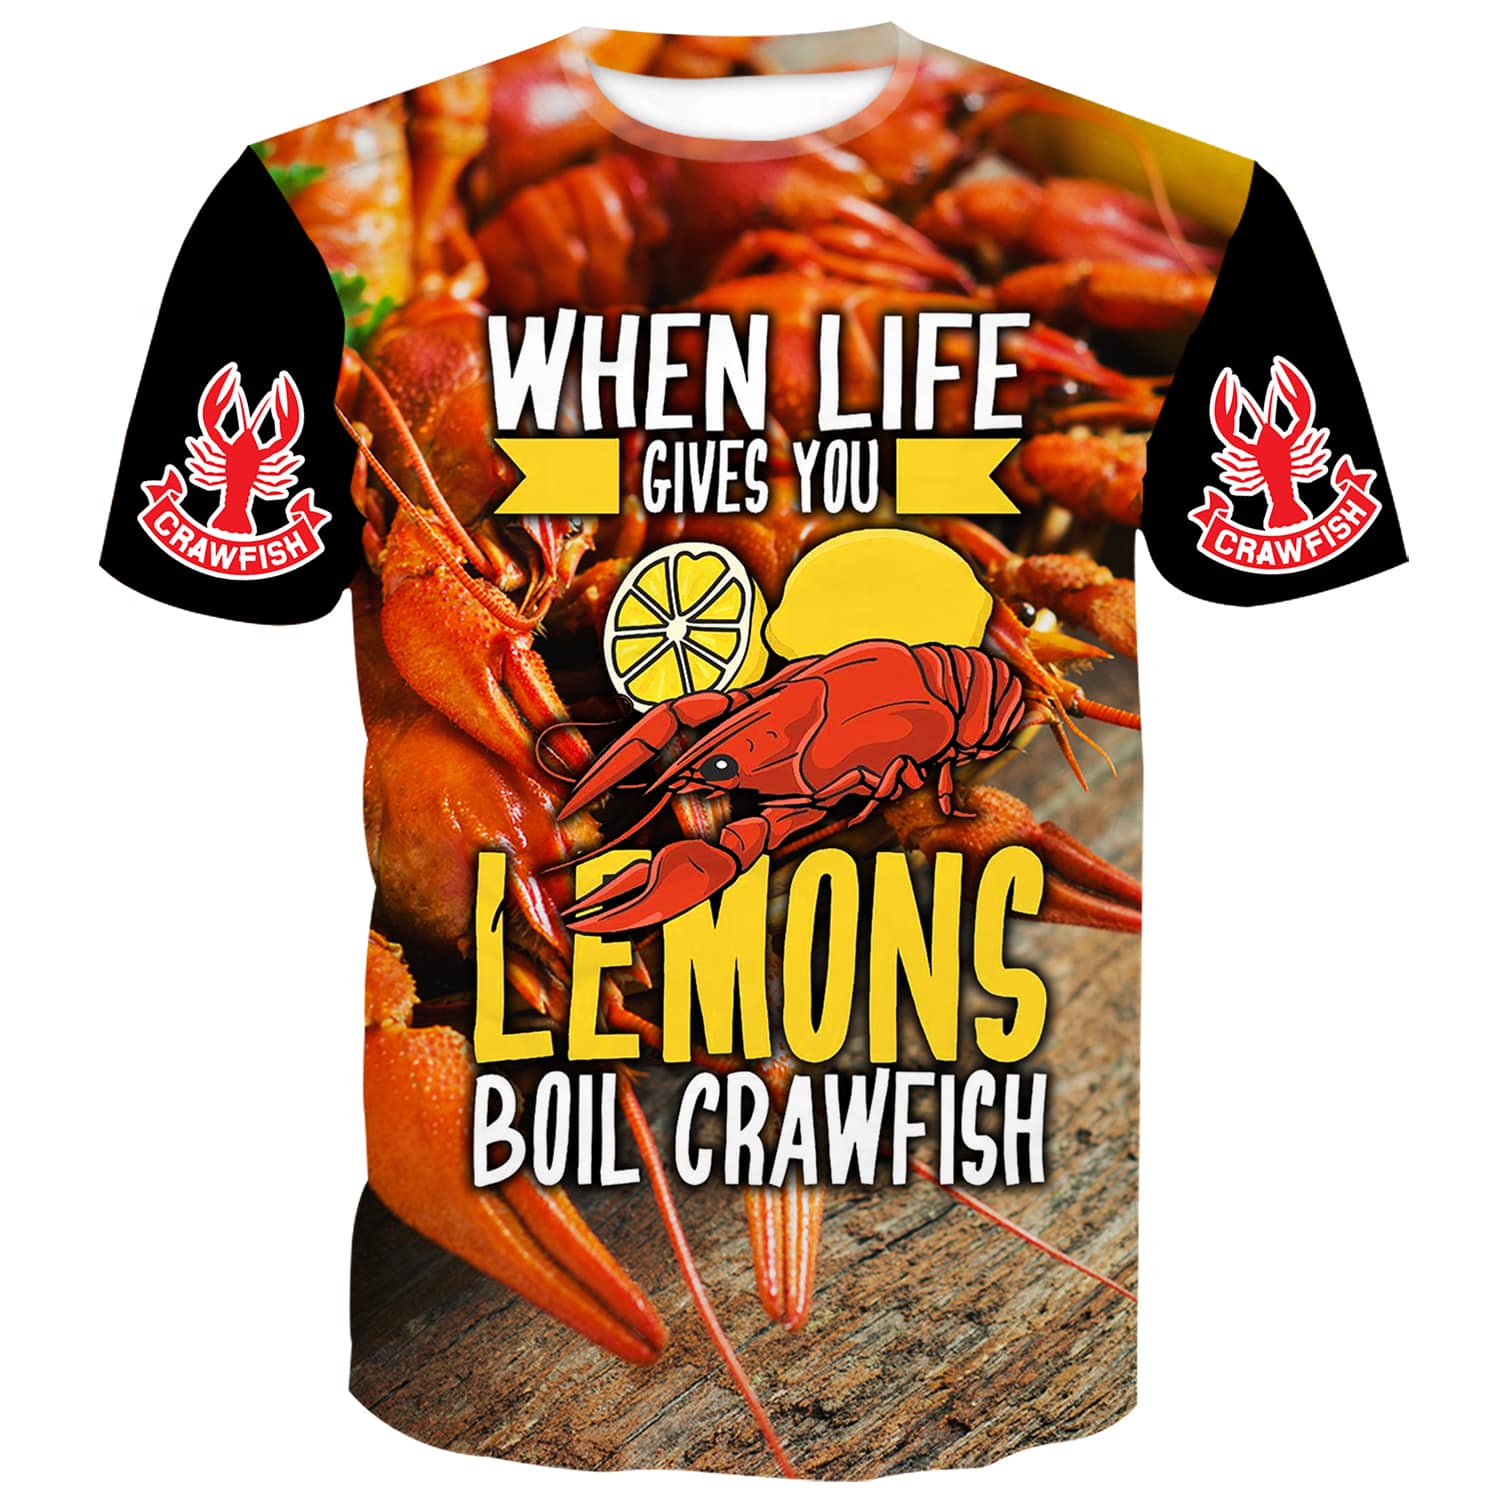 When life gives you lemons boil Crawfish- T-Shirt